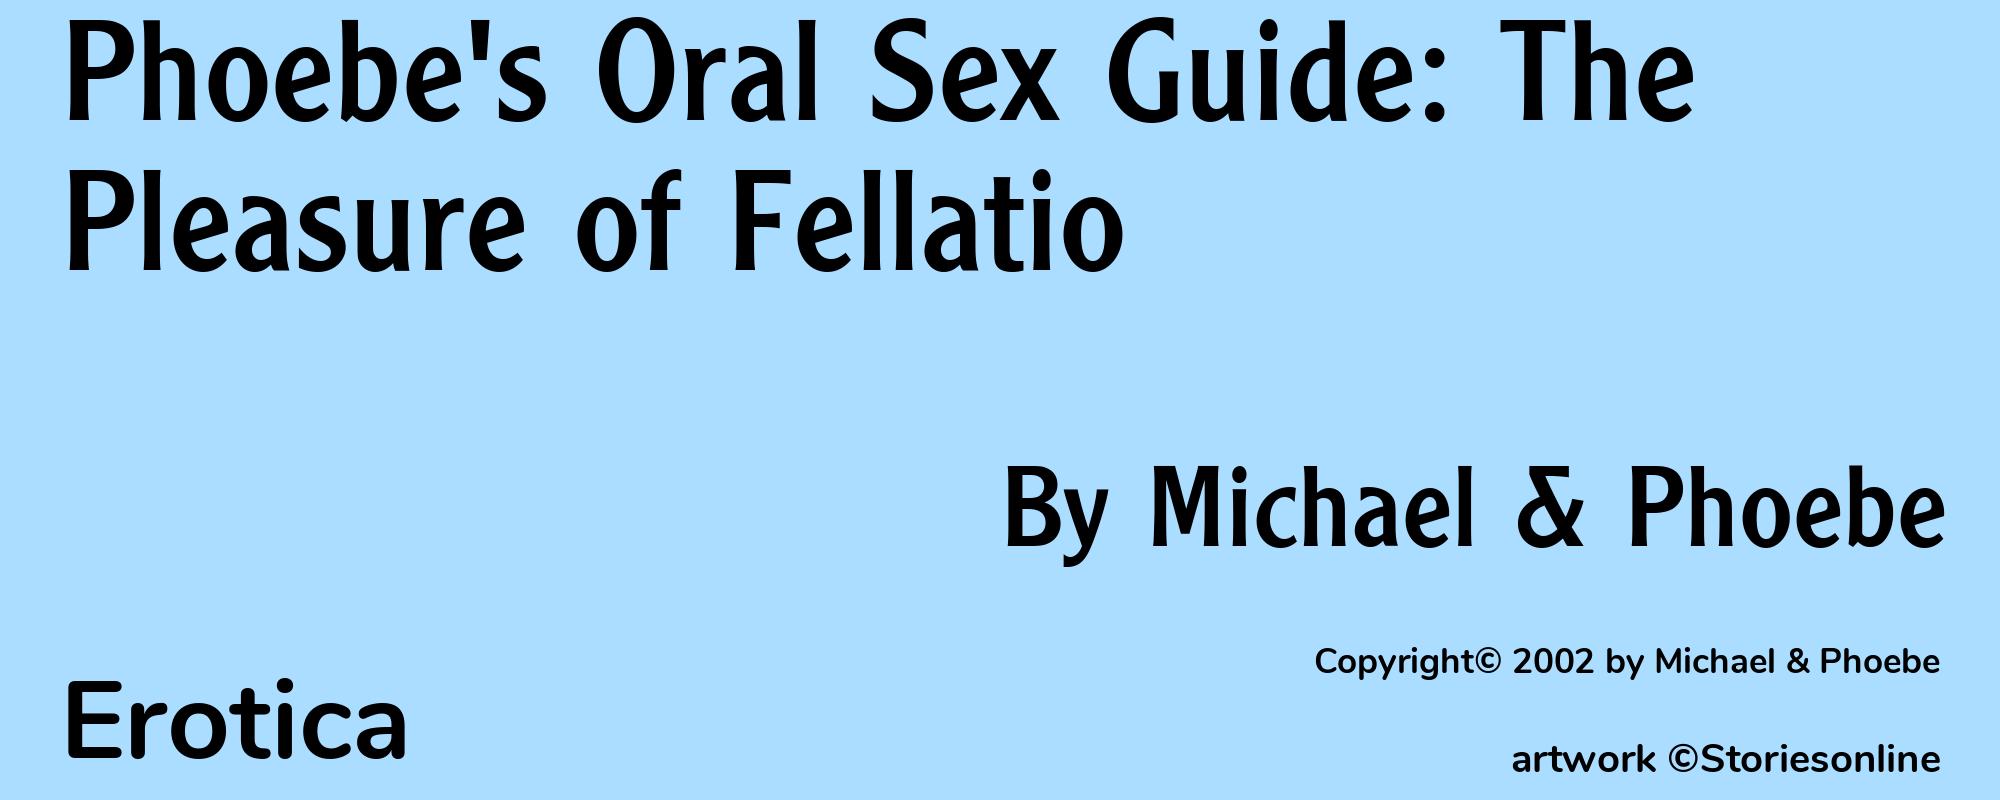 Phoebe's Oral Sex Guide: The Pleasure of Fellatio - Cover